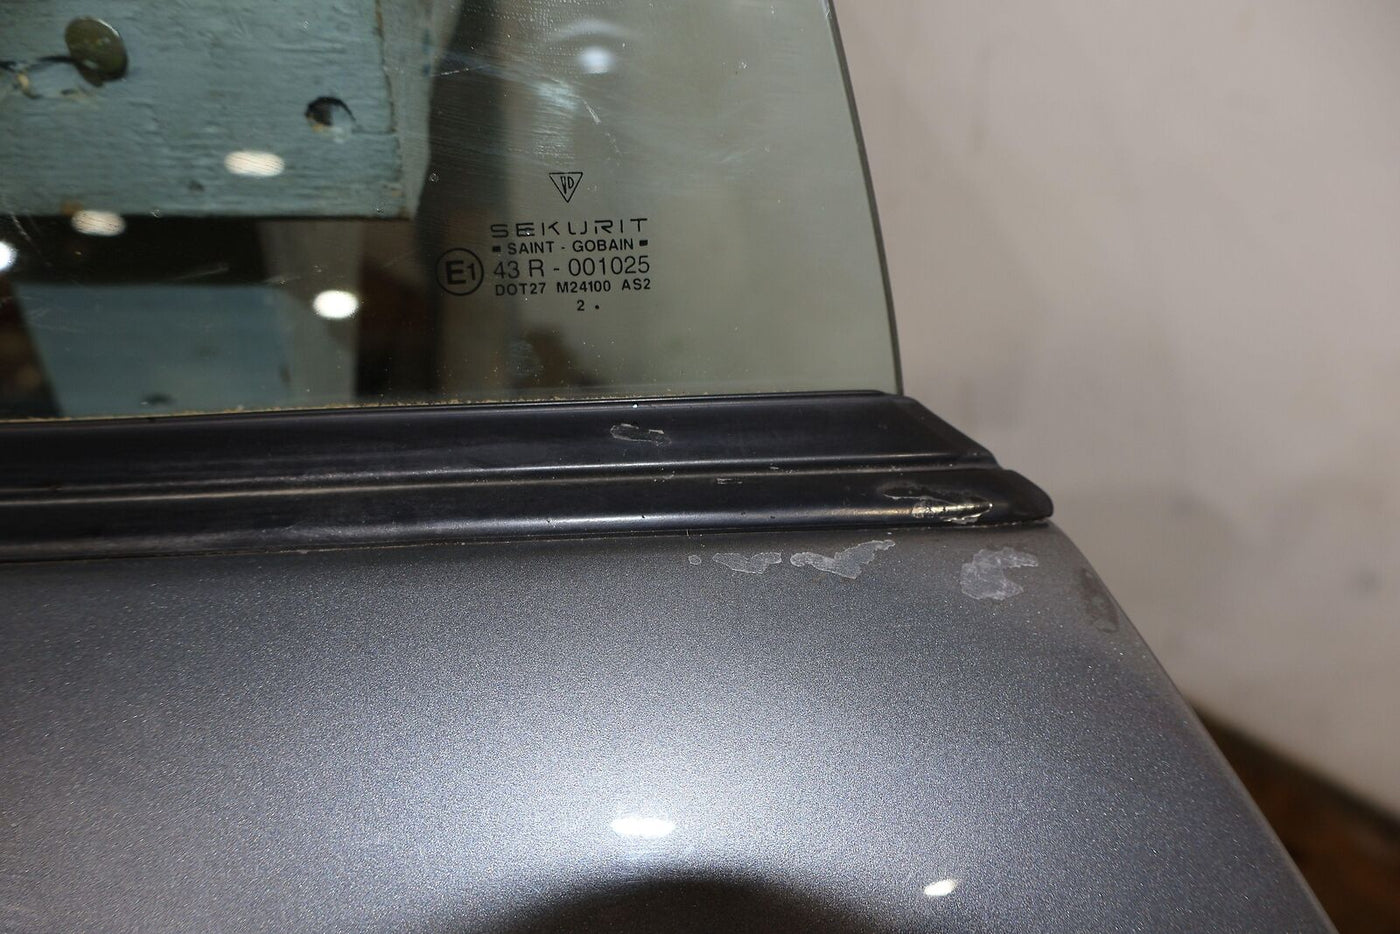 96-04 Porsche Boxster S Driver Right Door Shell (Seal Gray Metallic)See Notes